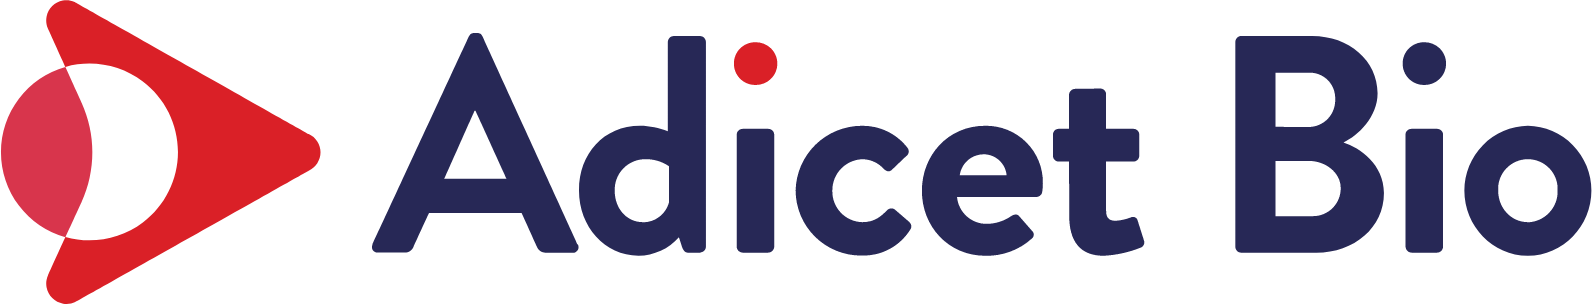 Adicet Bio logo large (transparent PNG)